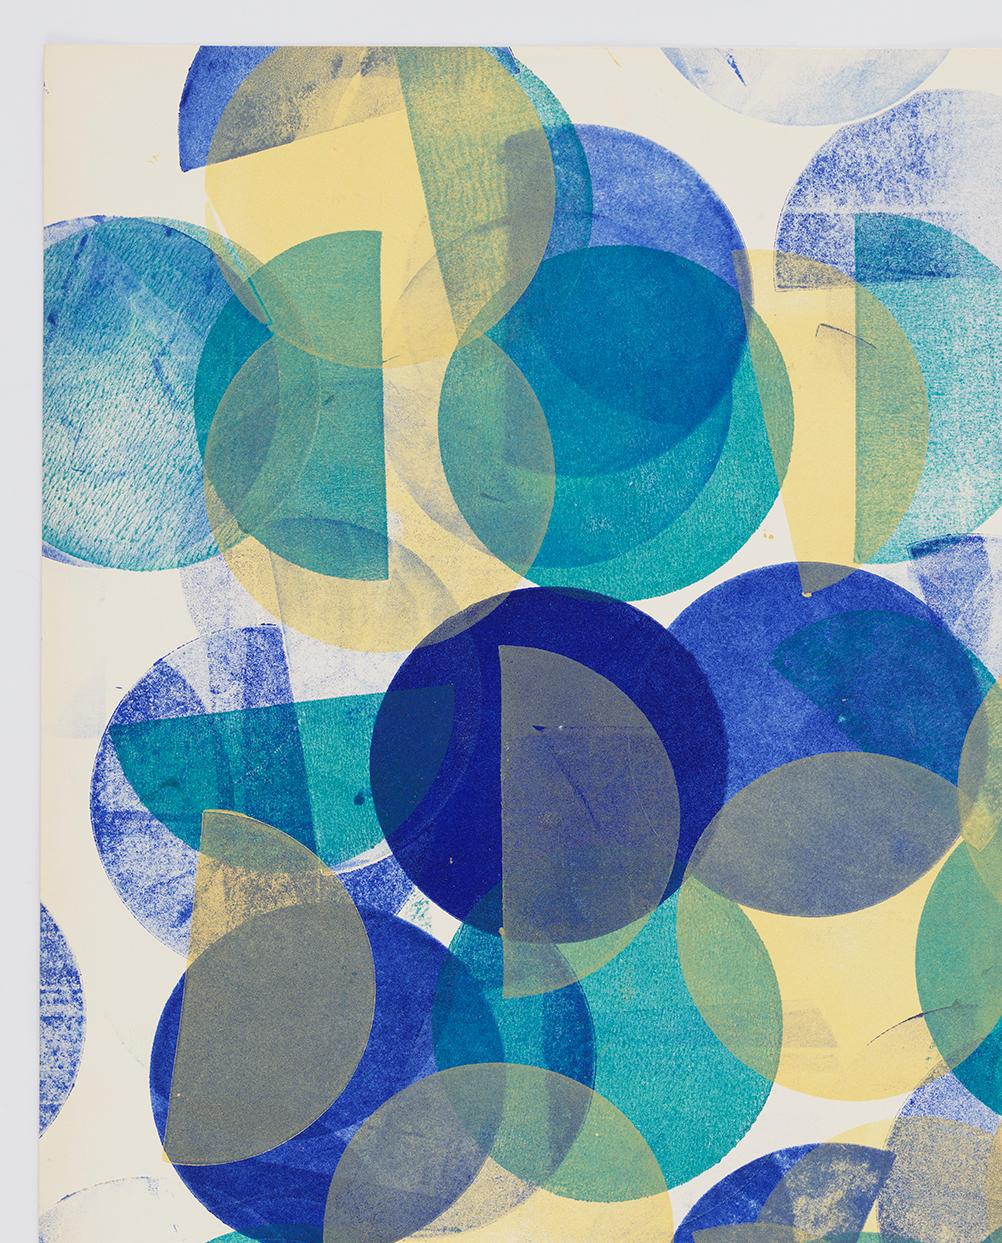 Small Circles of Blue - Abstract Geometric Print by Austin Thomas